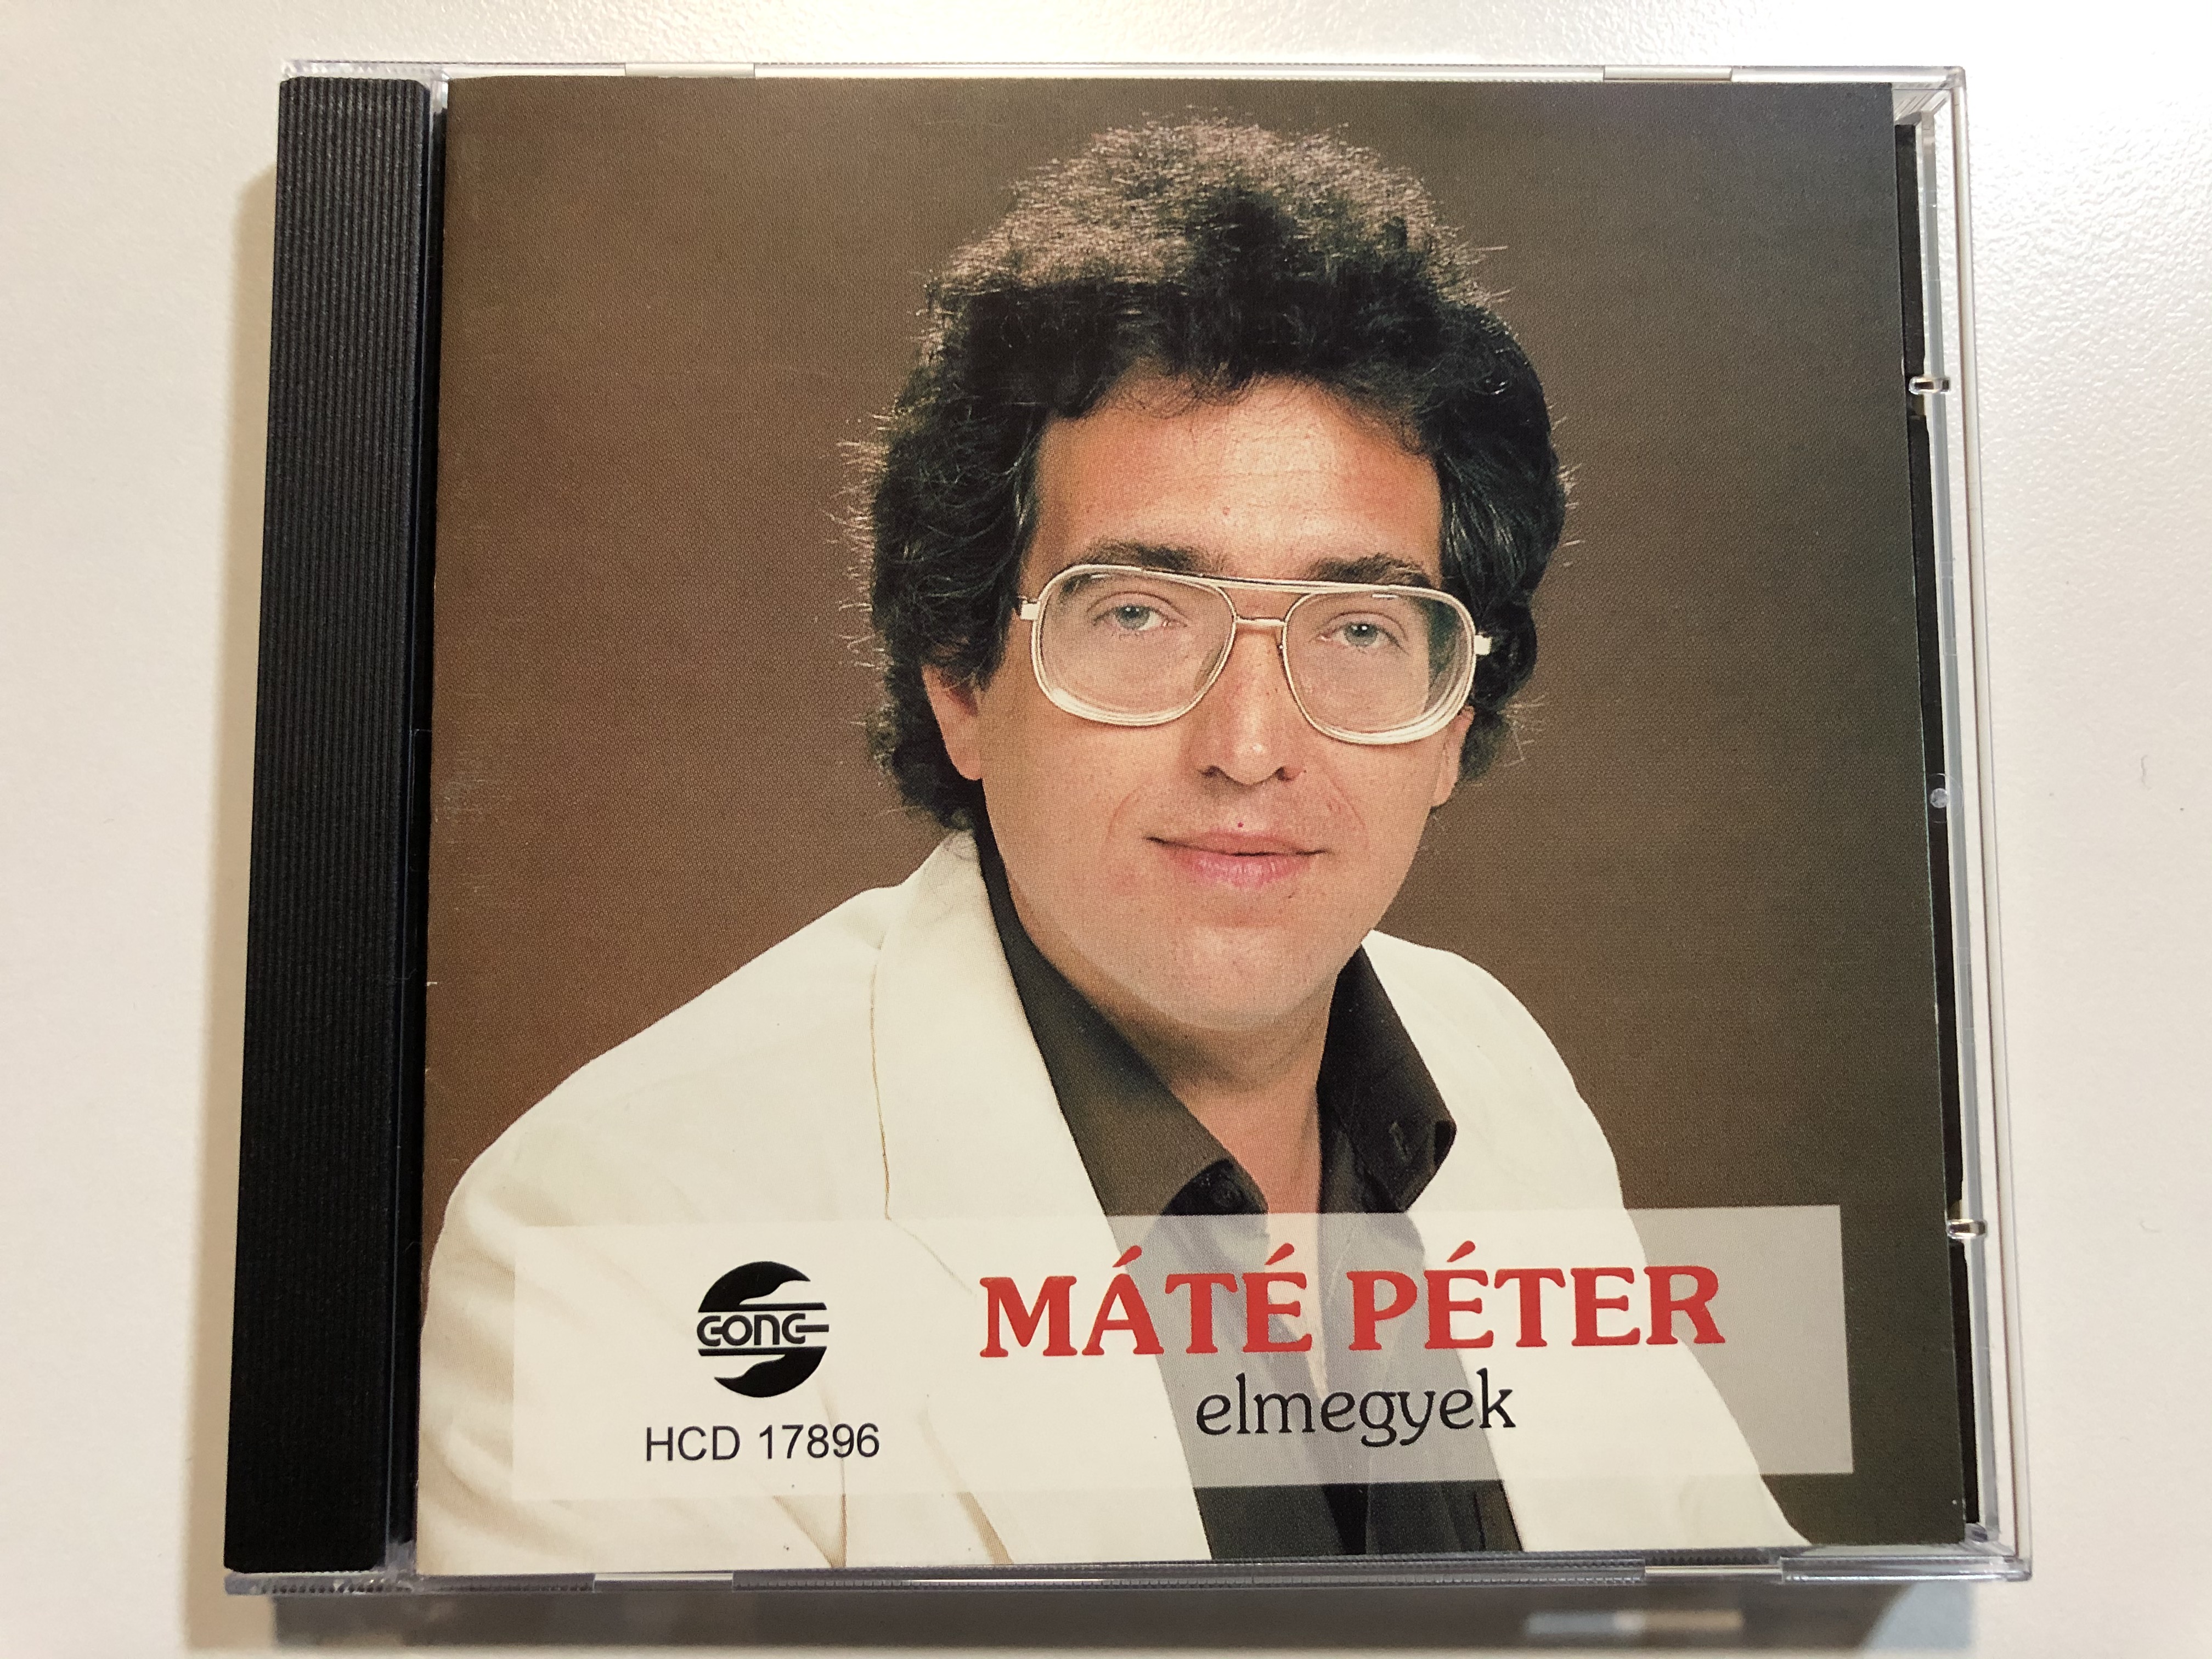 mate-peter-elmegyek-gong-audio-cd-1995-hcd-17896-1-.jpg